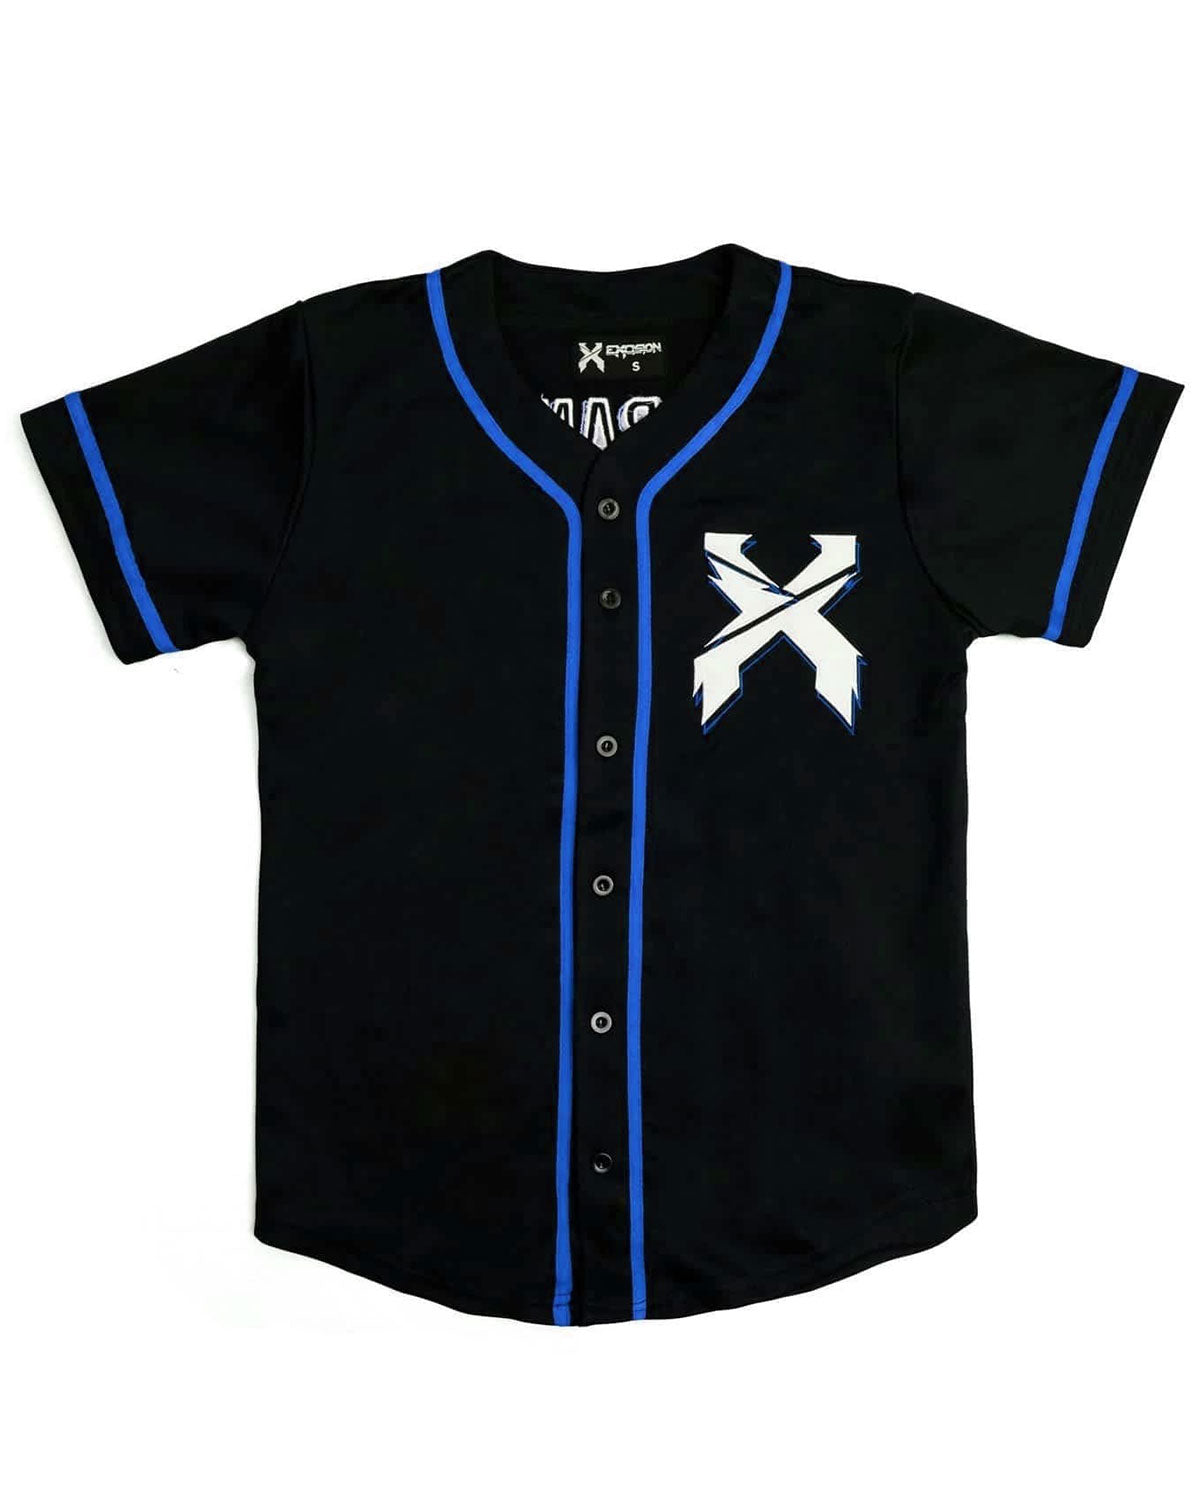 Excision Baseball Jersey - Black/Blue